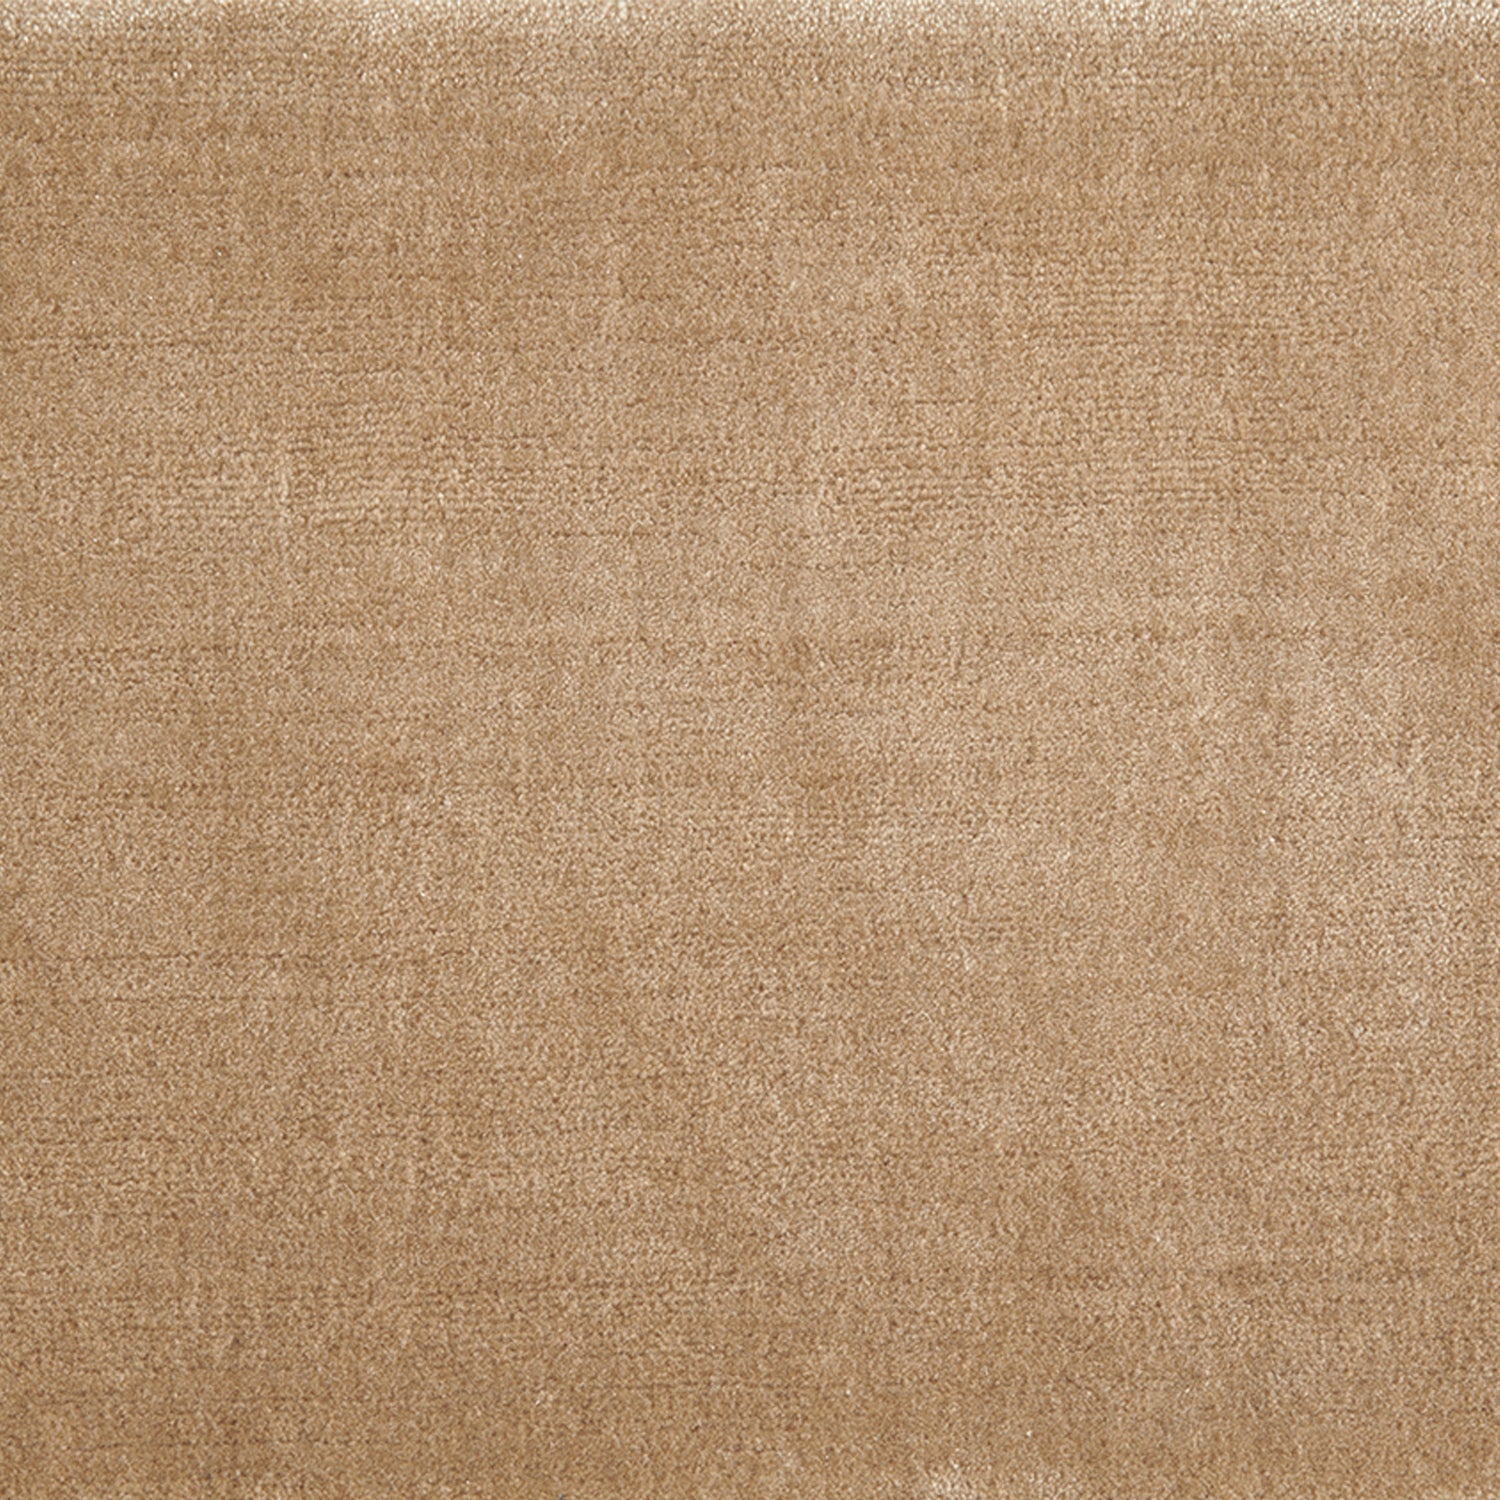 Nylon broadloom carpet swatch in a cut pile texture in tan.